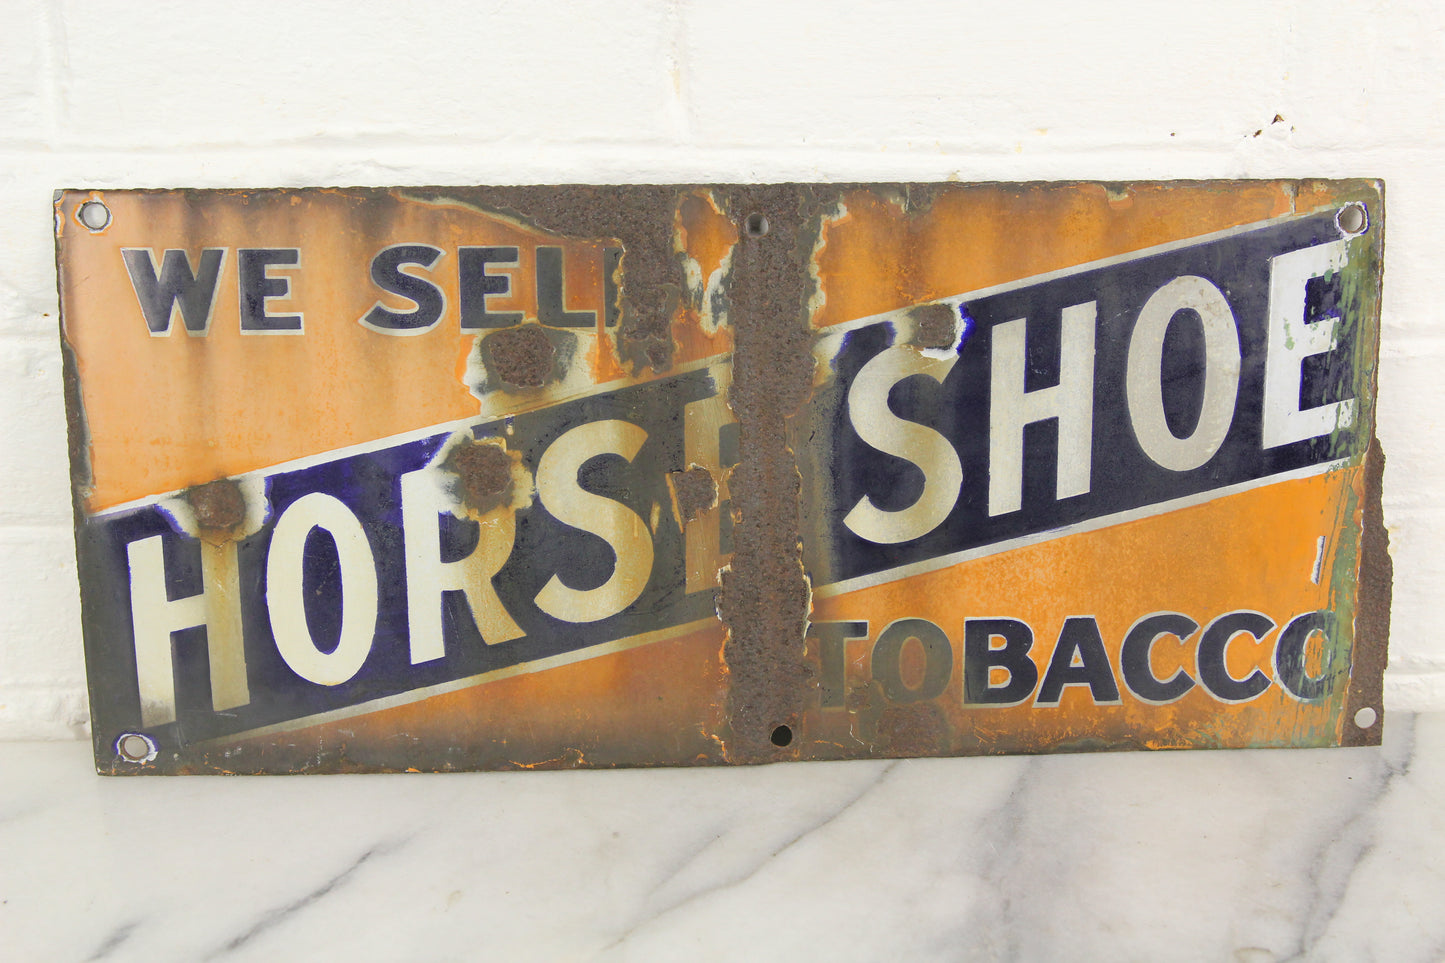 We Sell Horse Shoe Tobacco Double Sided Antique Porcelain Flange Sign (Missing Flange)